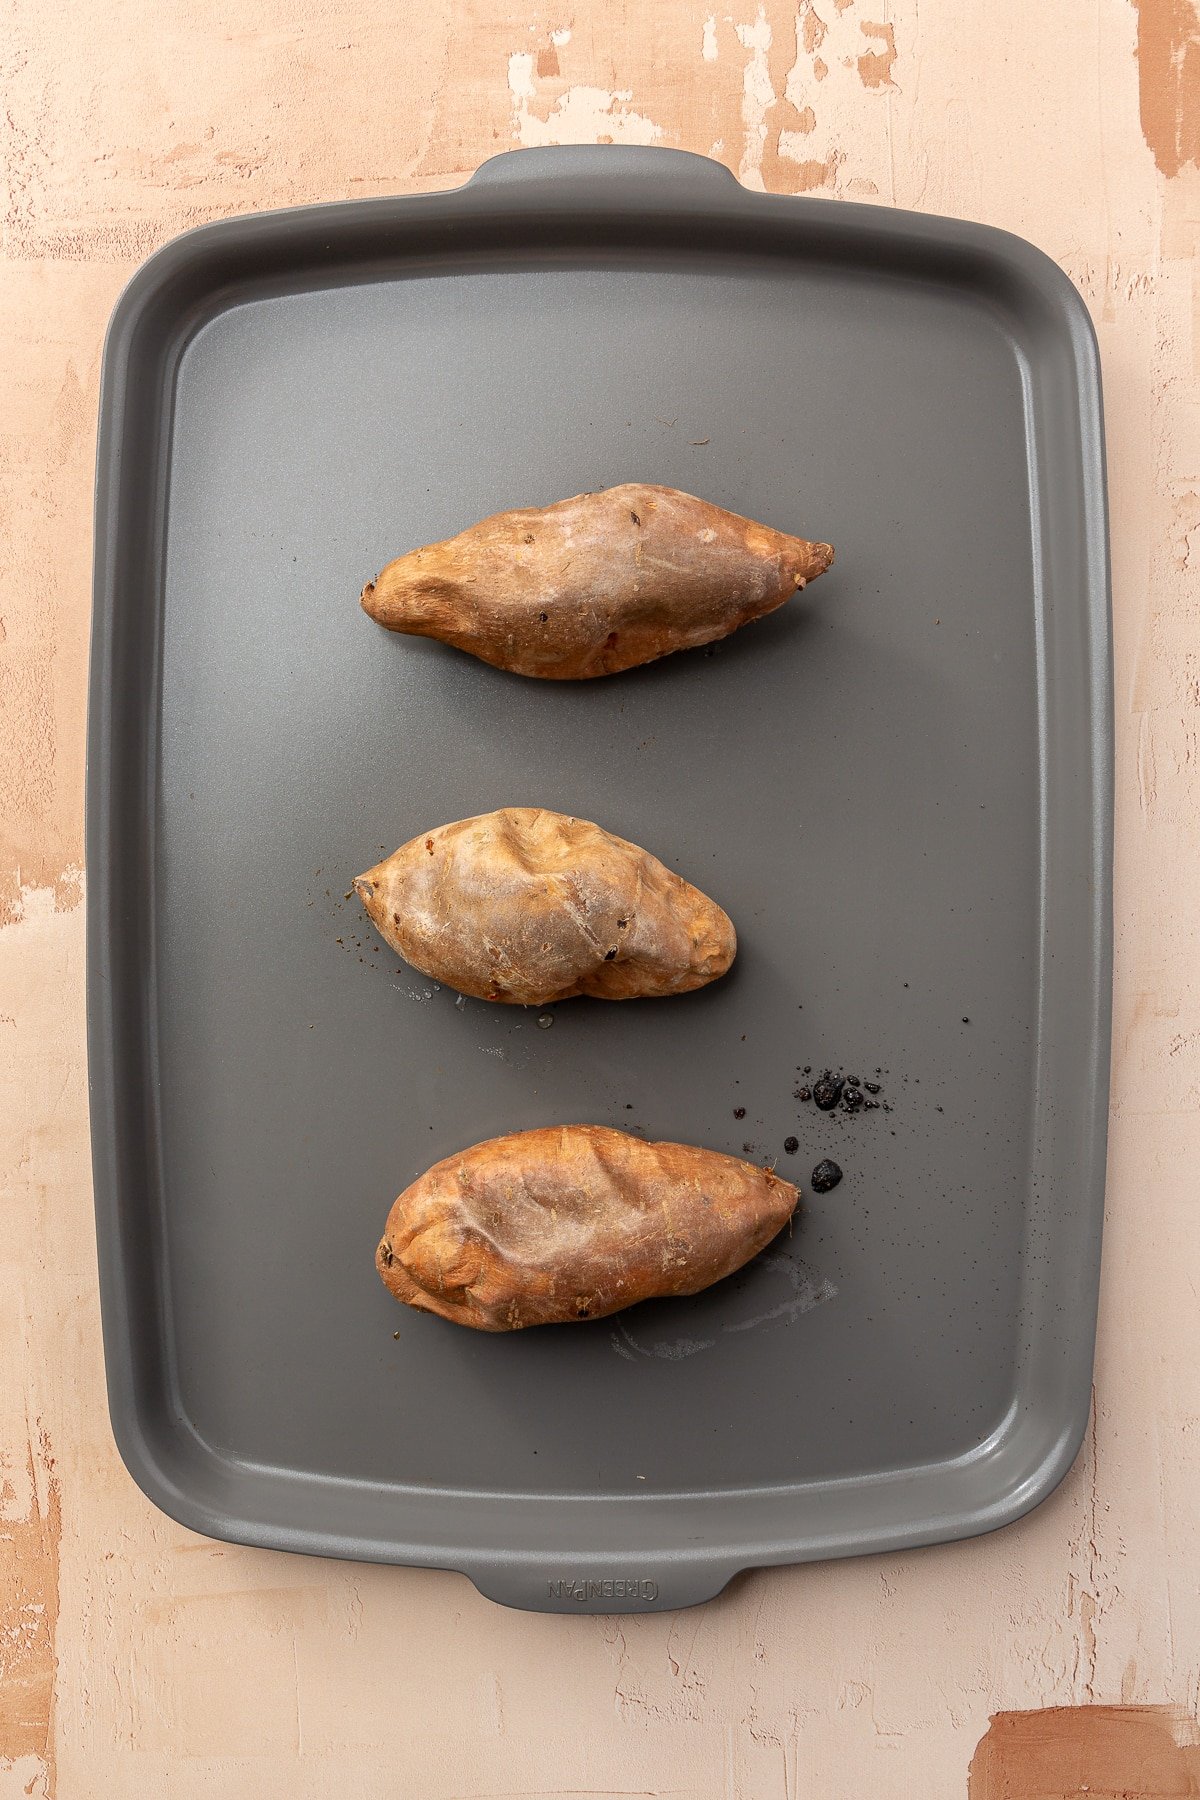 Three, now baked, sweet potatoes sit on a grey baking pan.